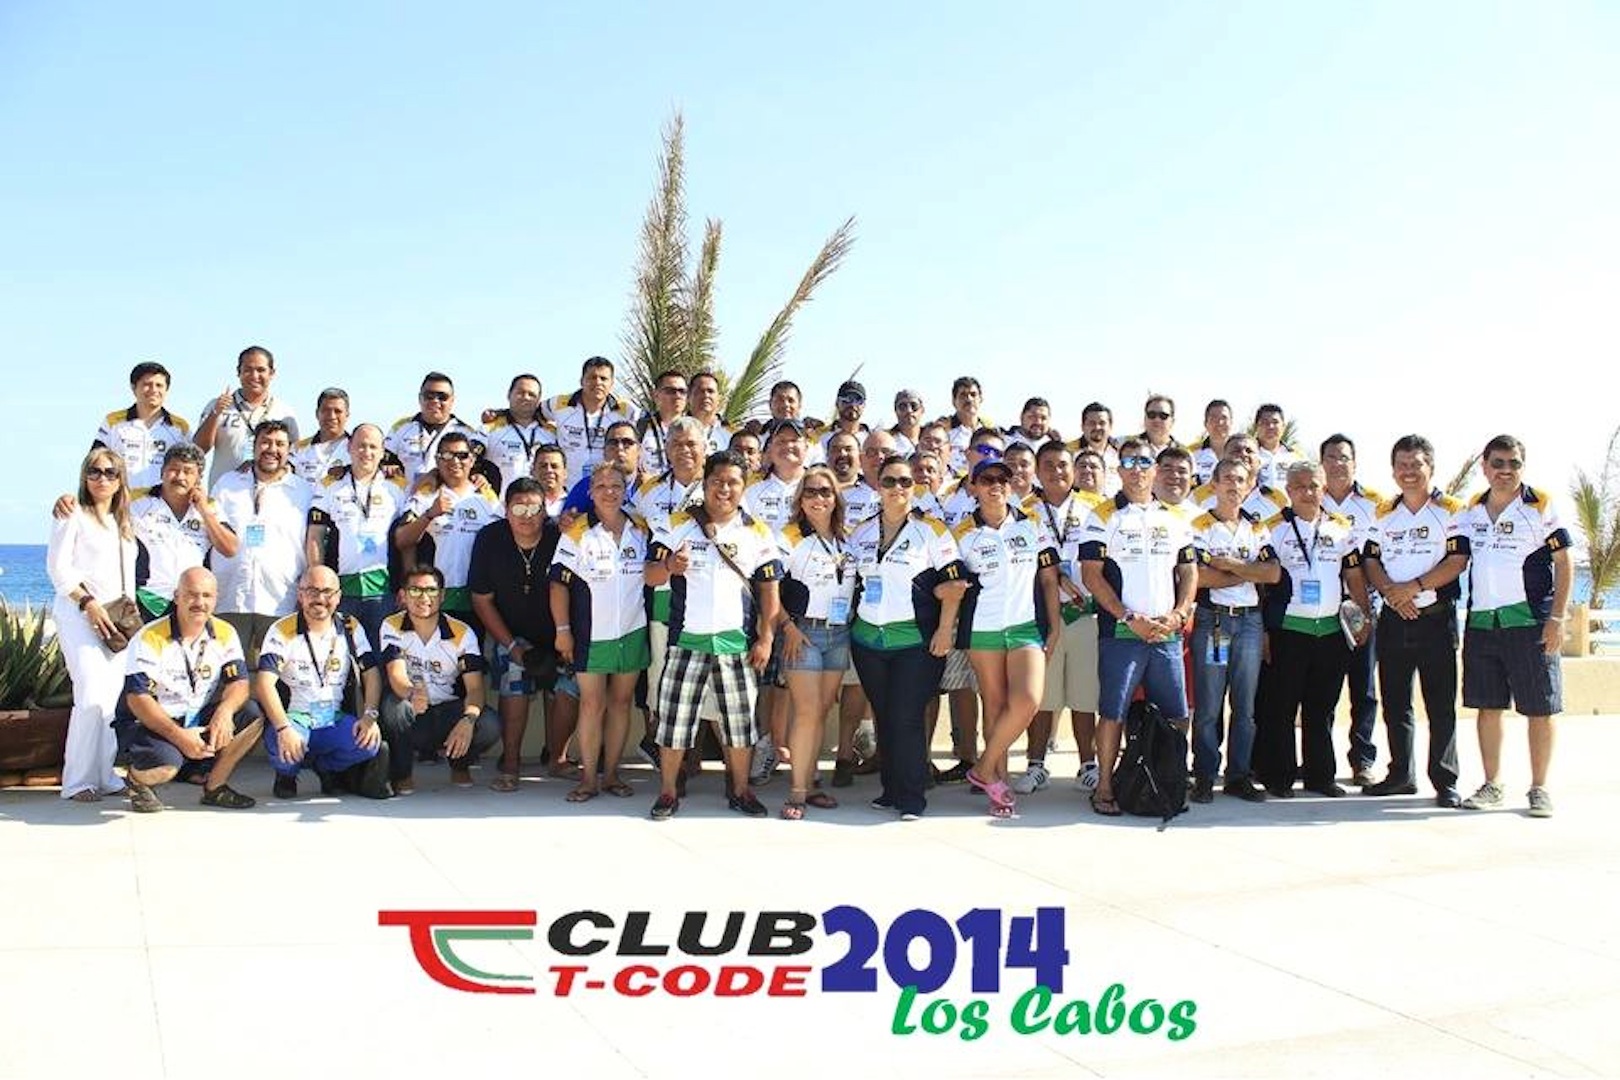 Mexico Tcode Club 2014